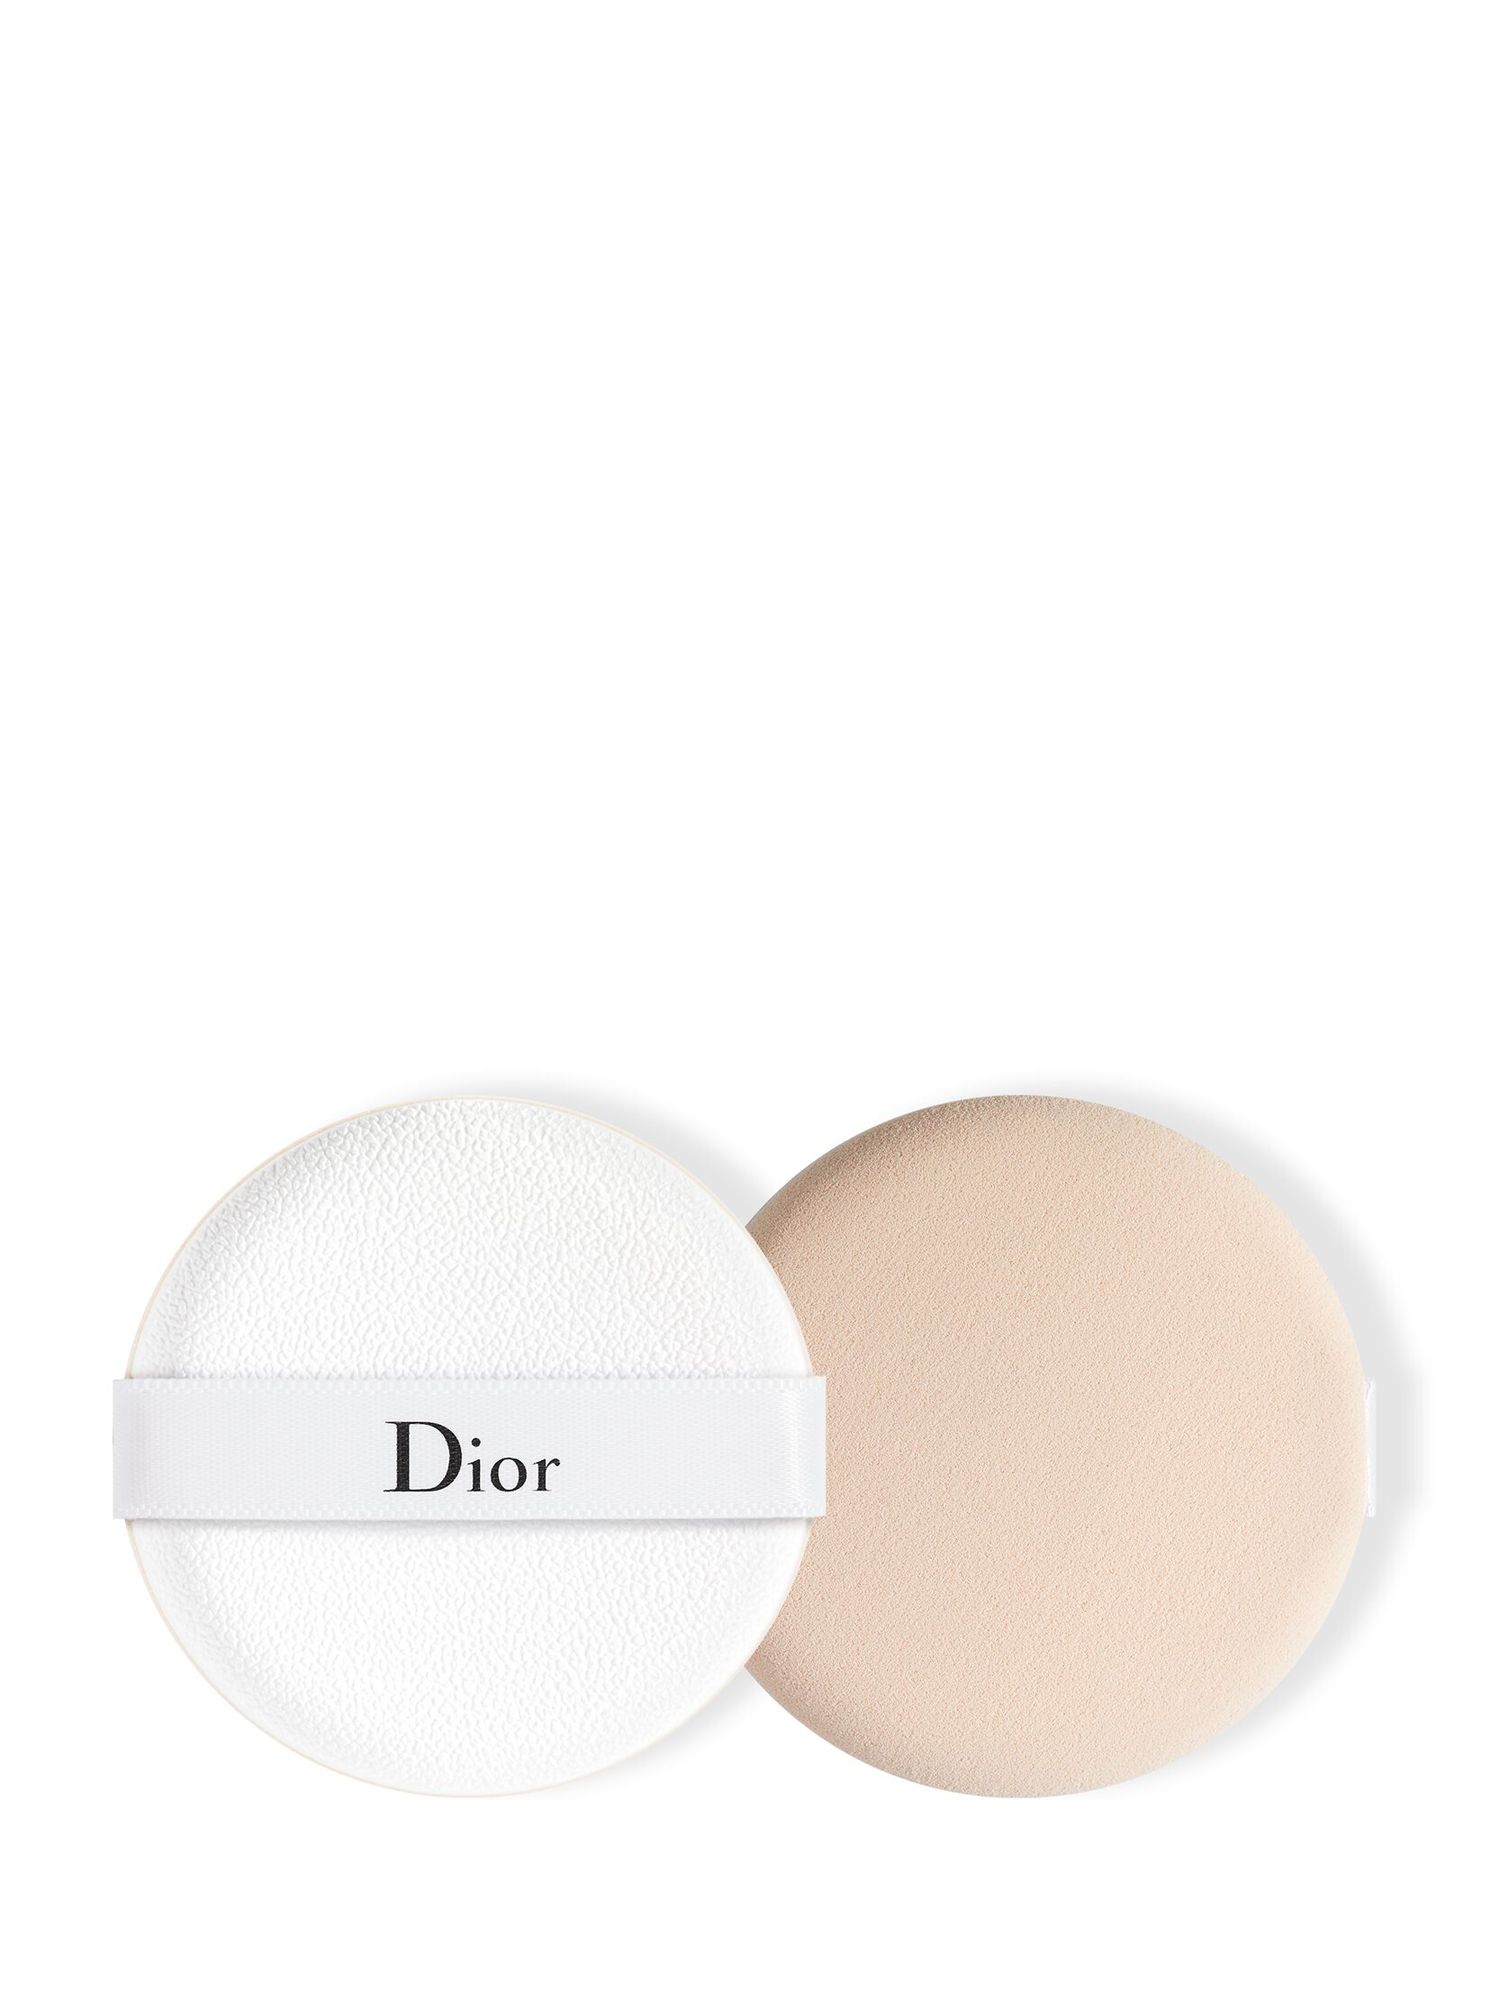 dior makeup sponge